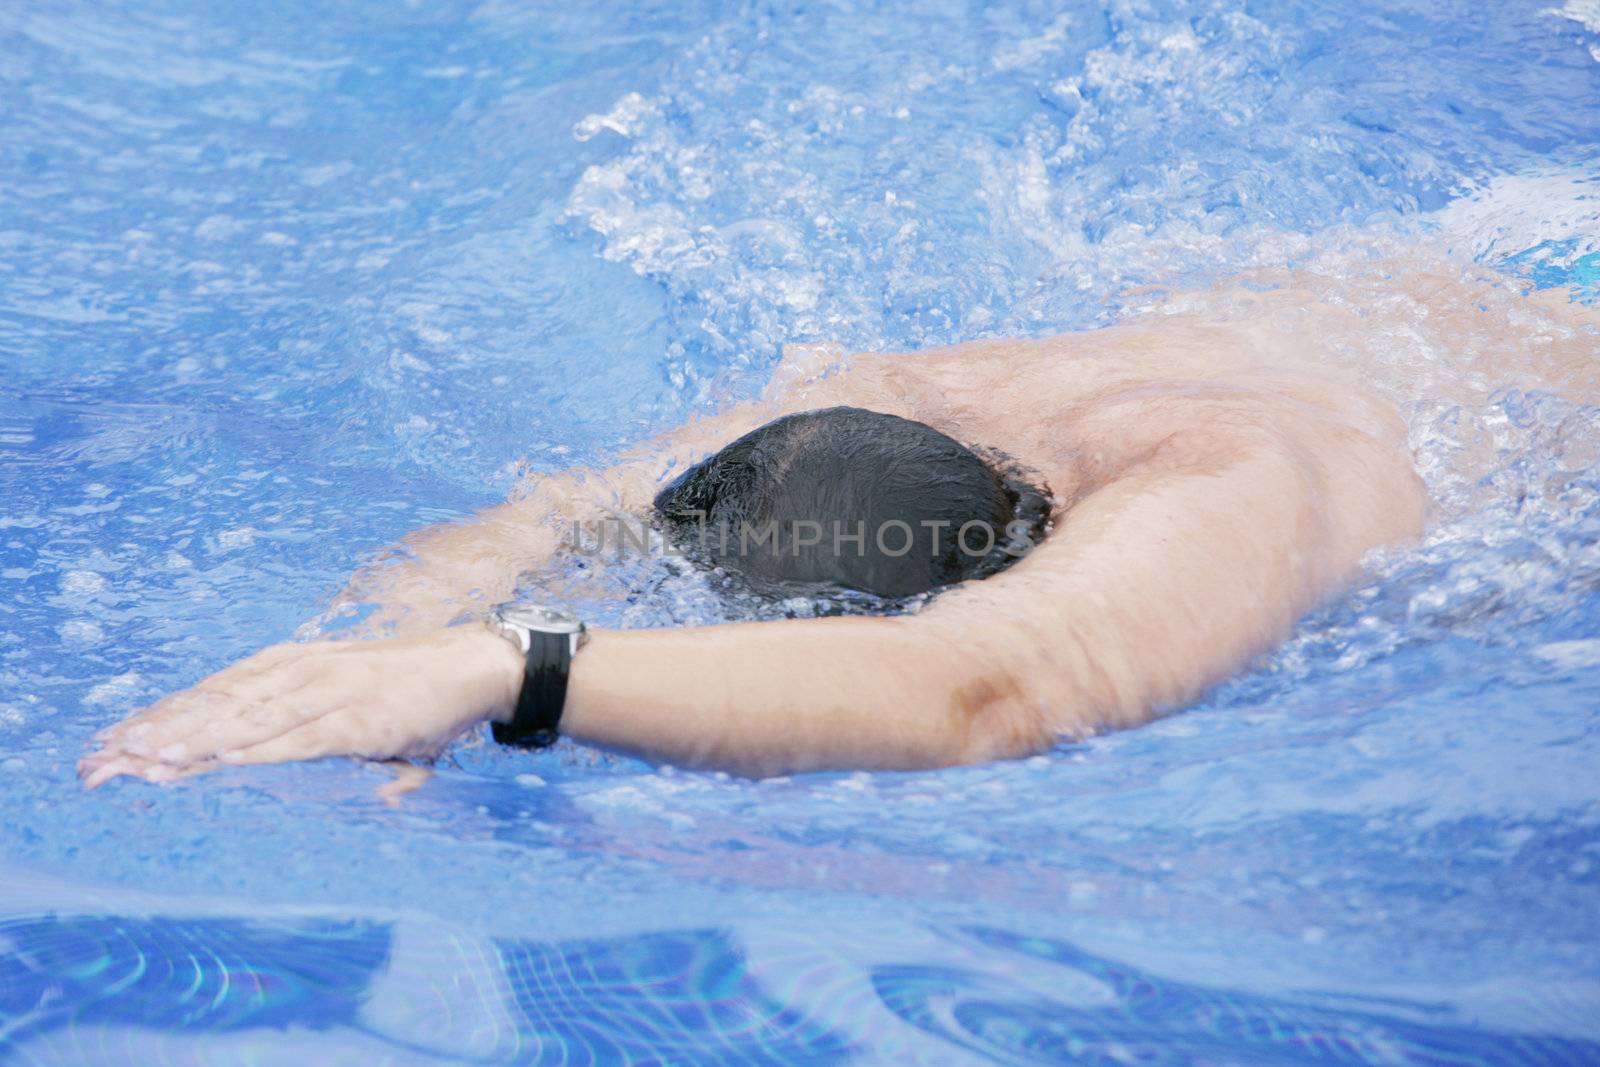 professional swimmer by dacasdo